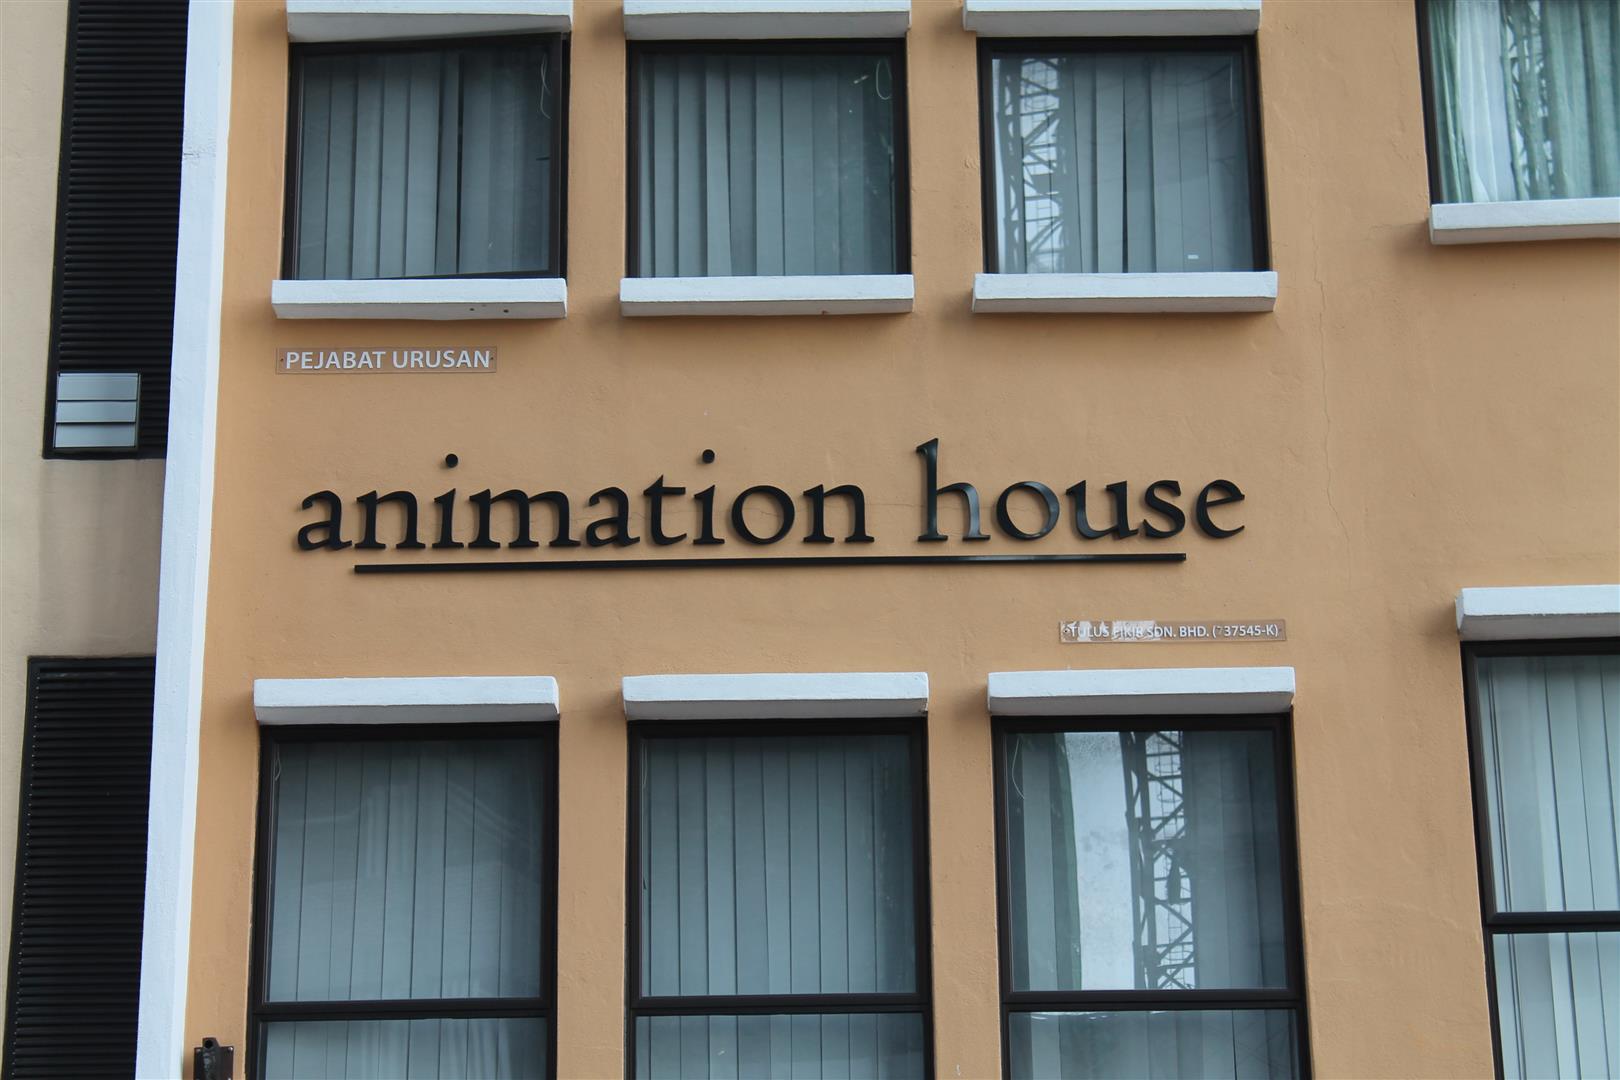 Tulus Fikir - Visit to Local Animation Company 37